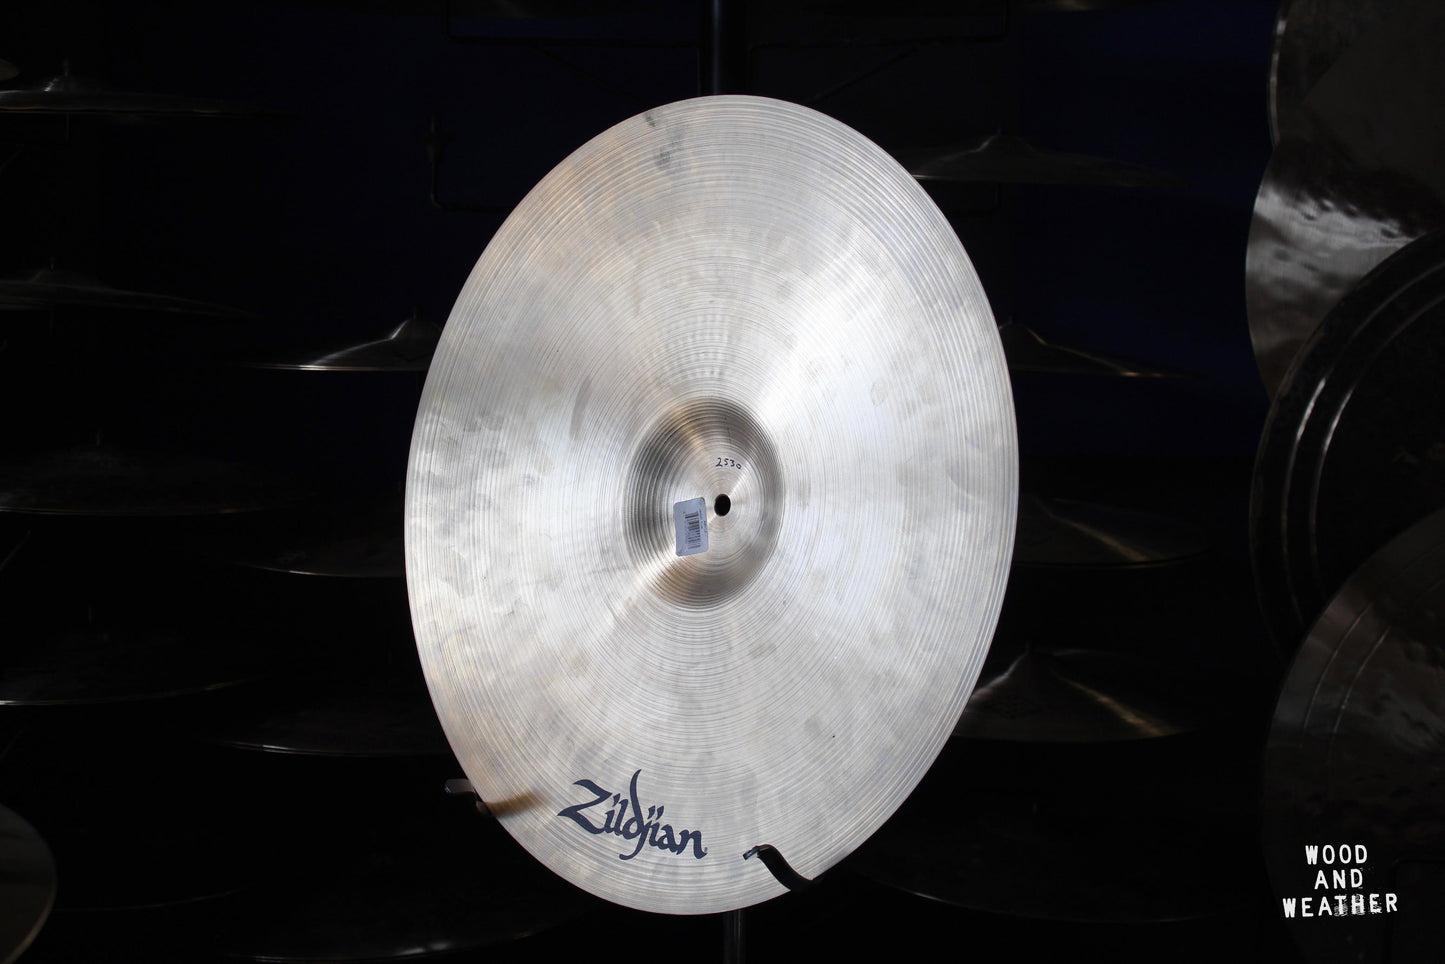 Used Zildjian 21" Armand Ride Cymbal 2530g